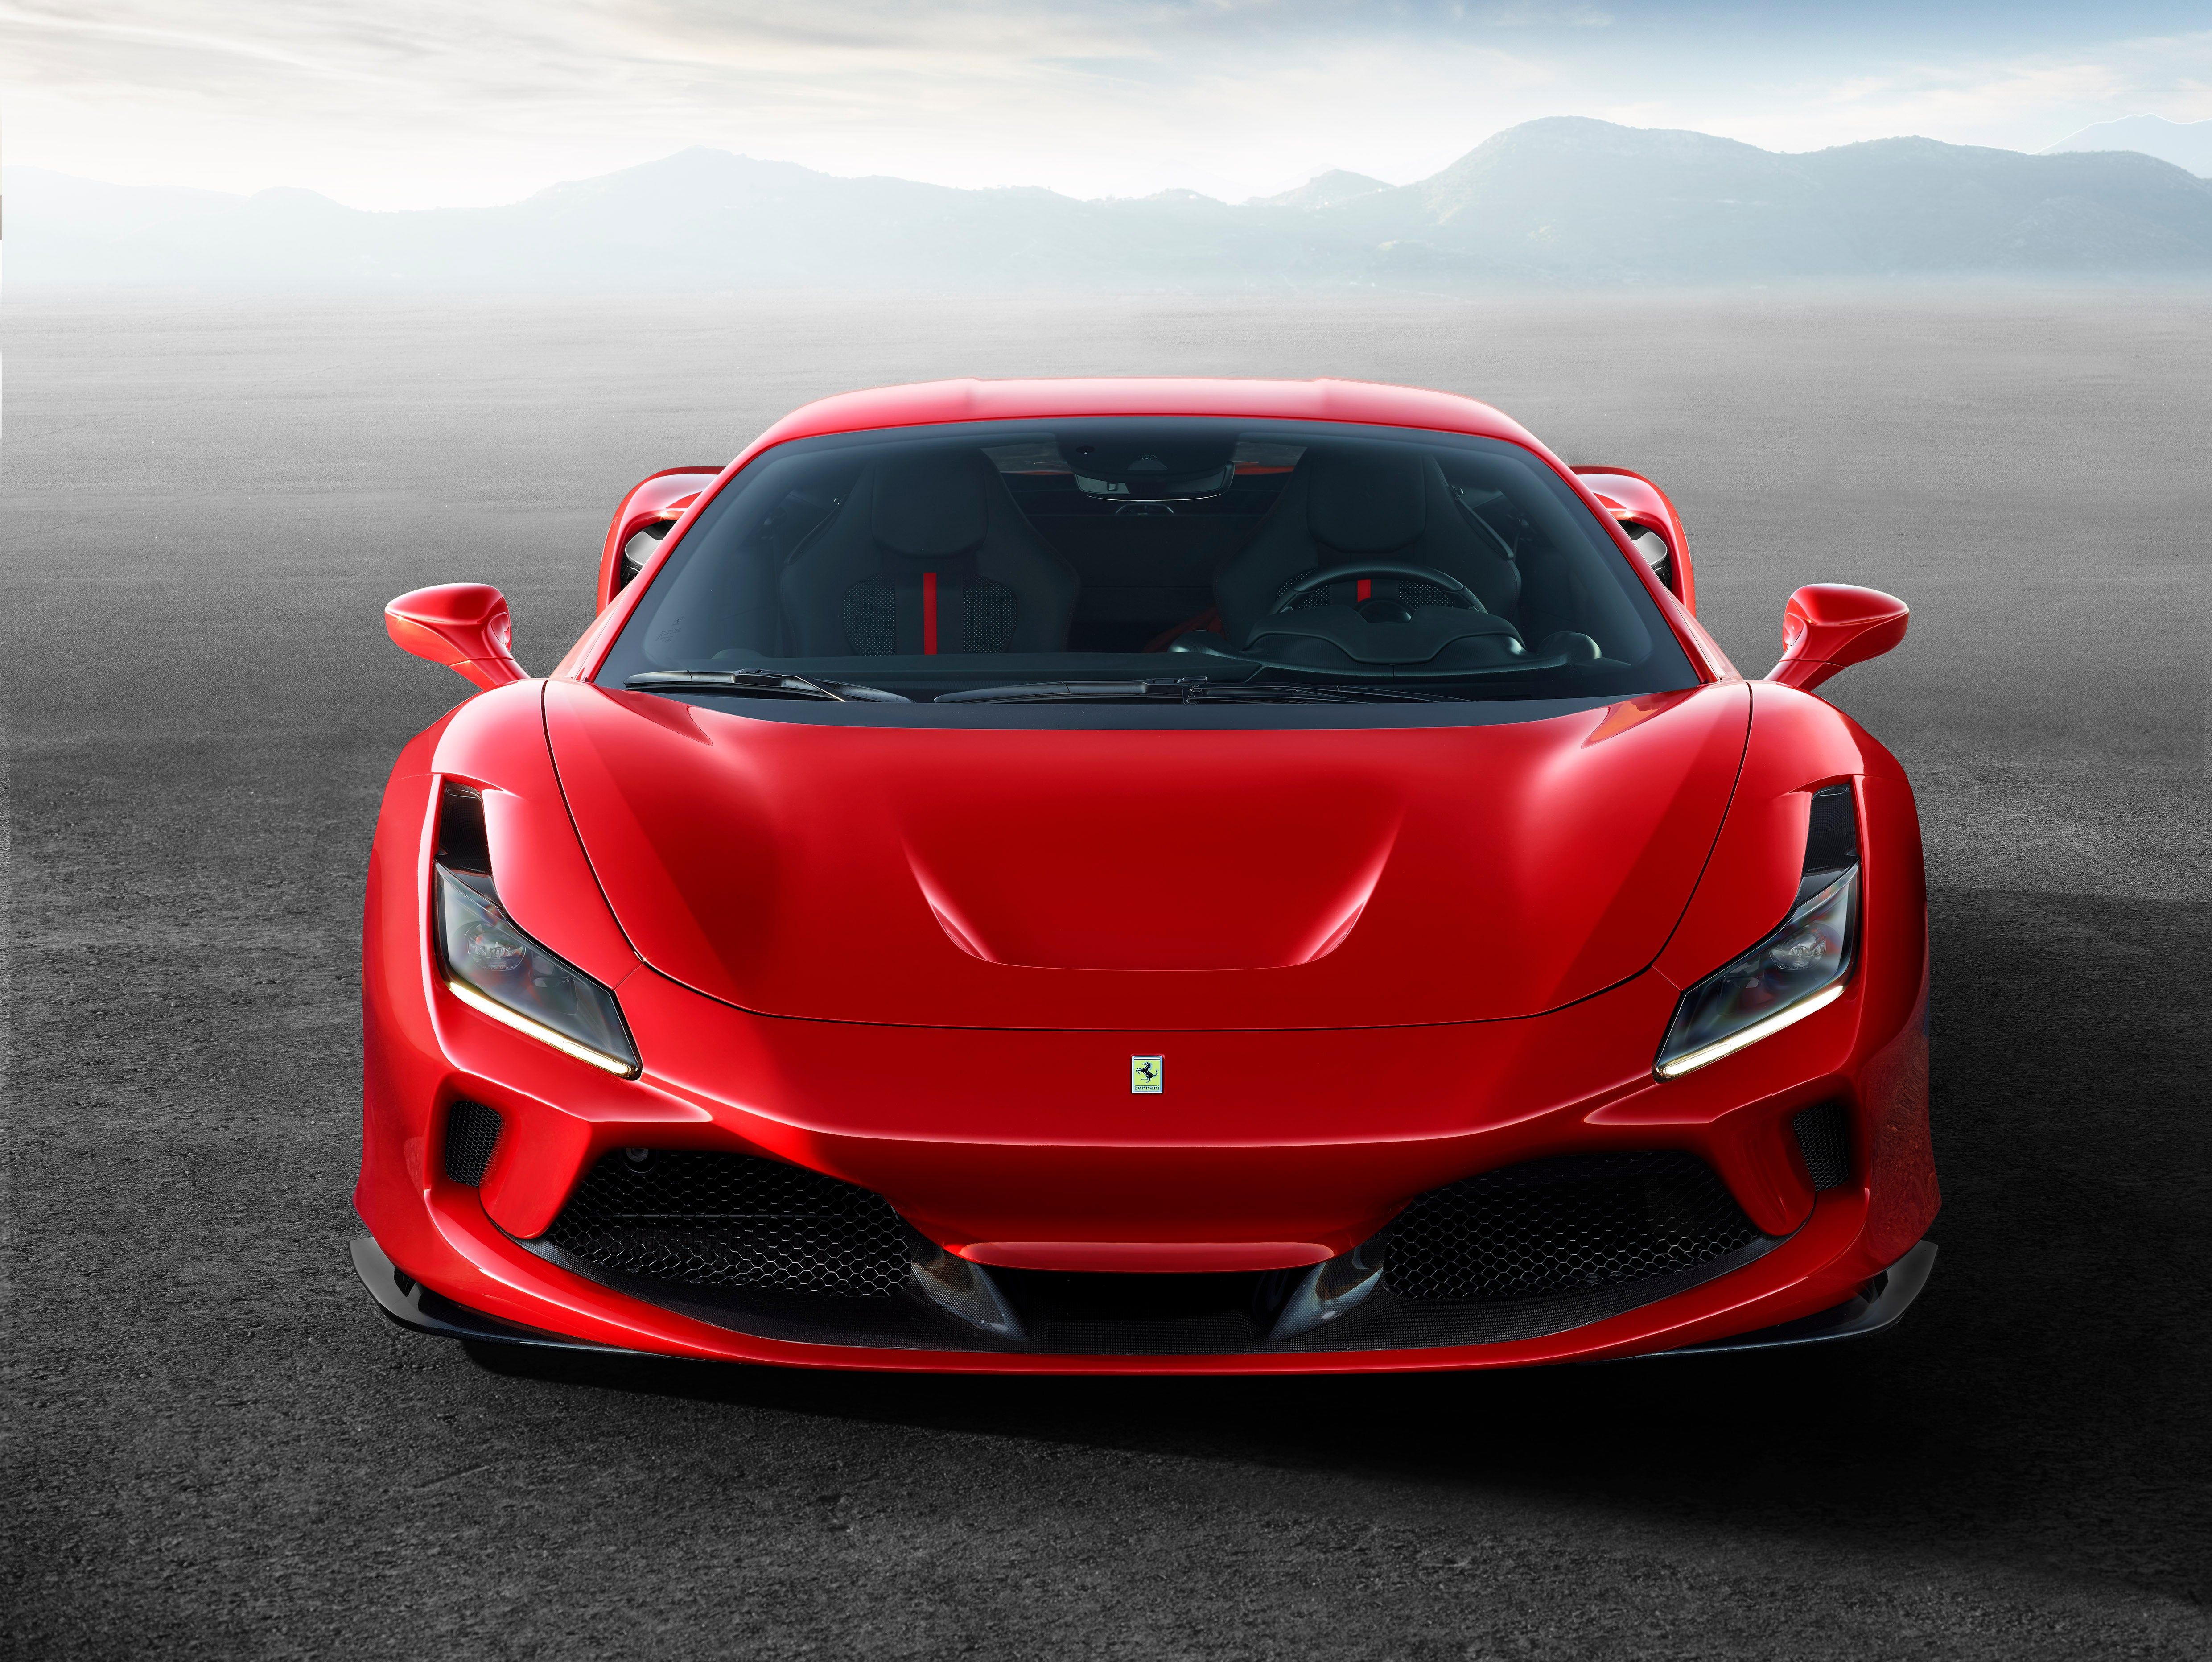 Ferrari F8 Tributo 4k, HD Cars, 4k Wallpaper, Image, Background, Photo and Picture